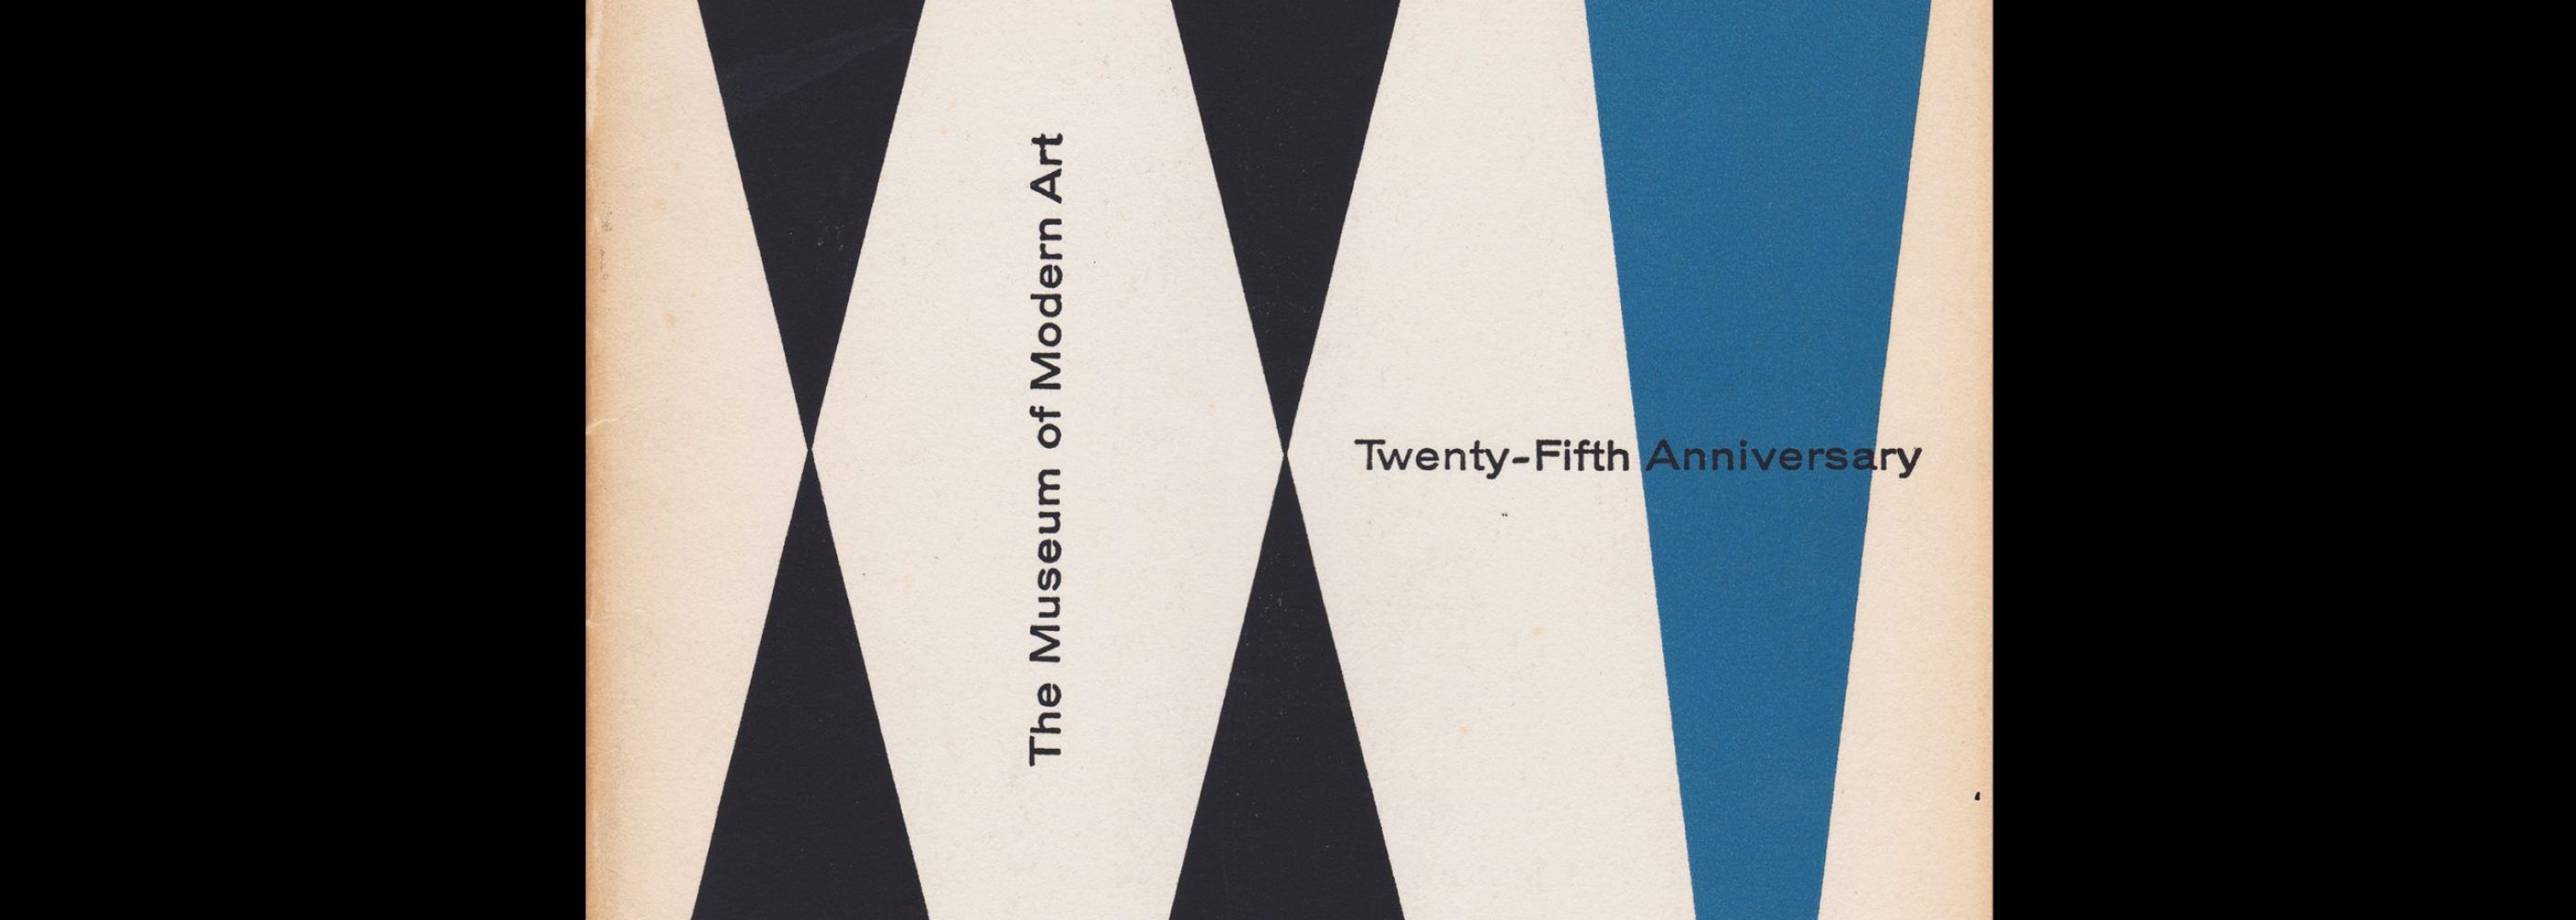 Twenty-Fifth Anniversary, Bulletin, Museum of Modern Art, 1954 designed by Leo Lionni